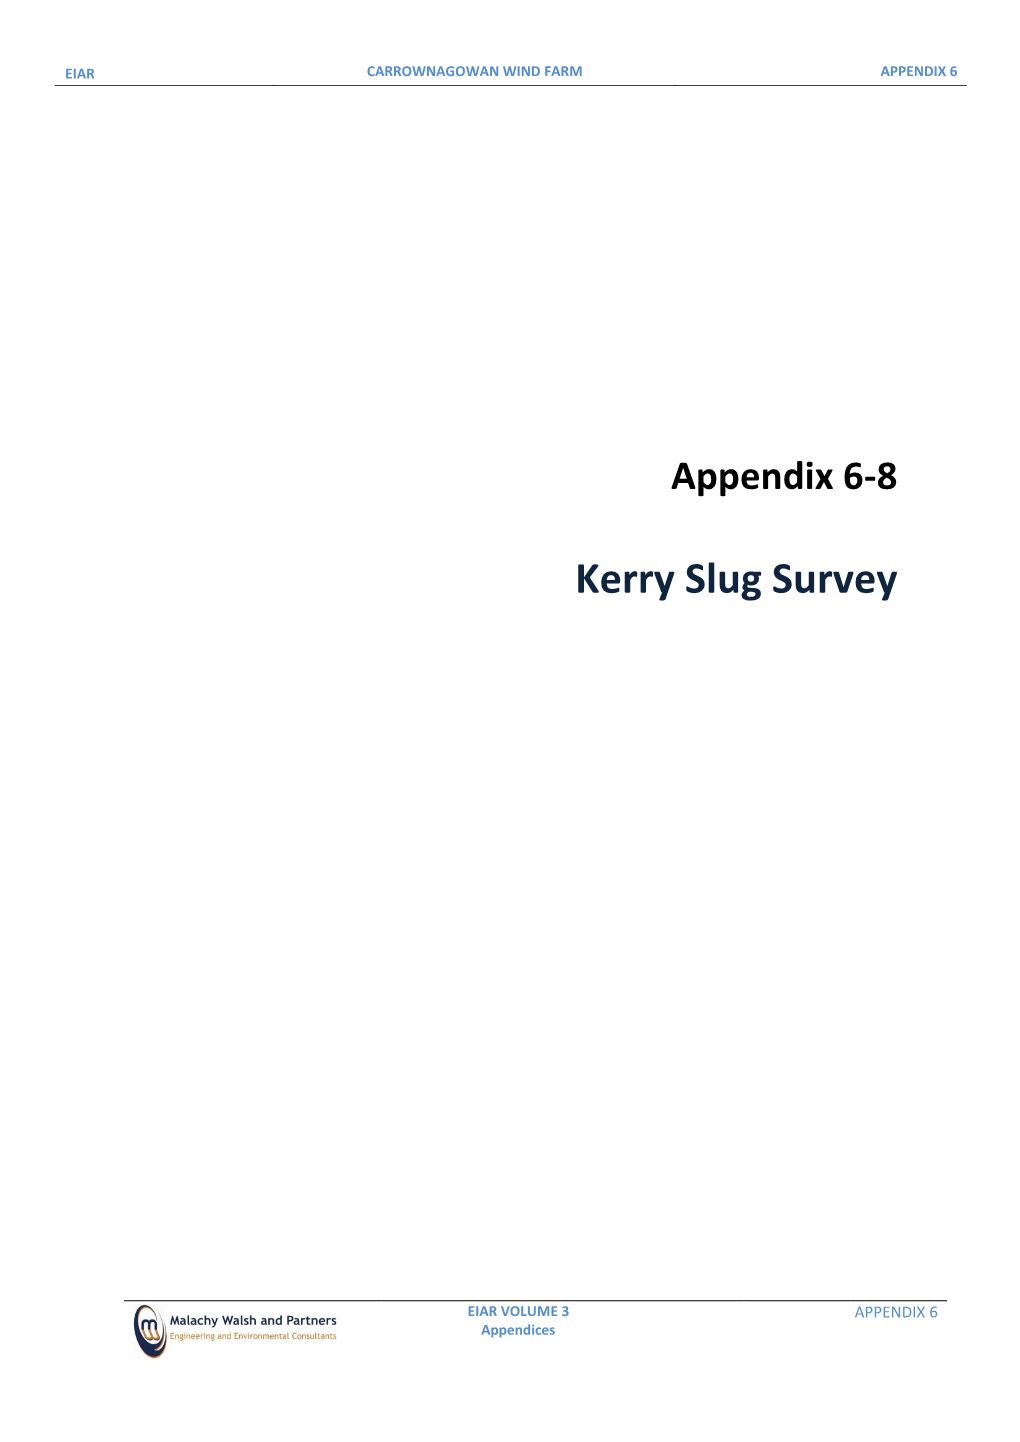 6-8 Kerry Slug Survey